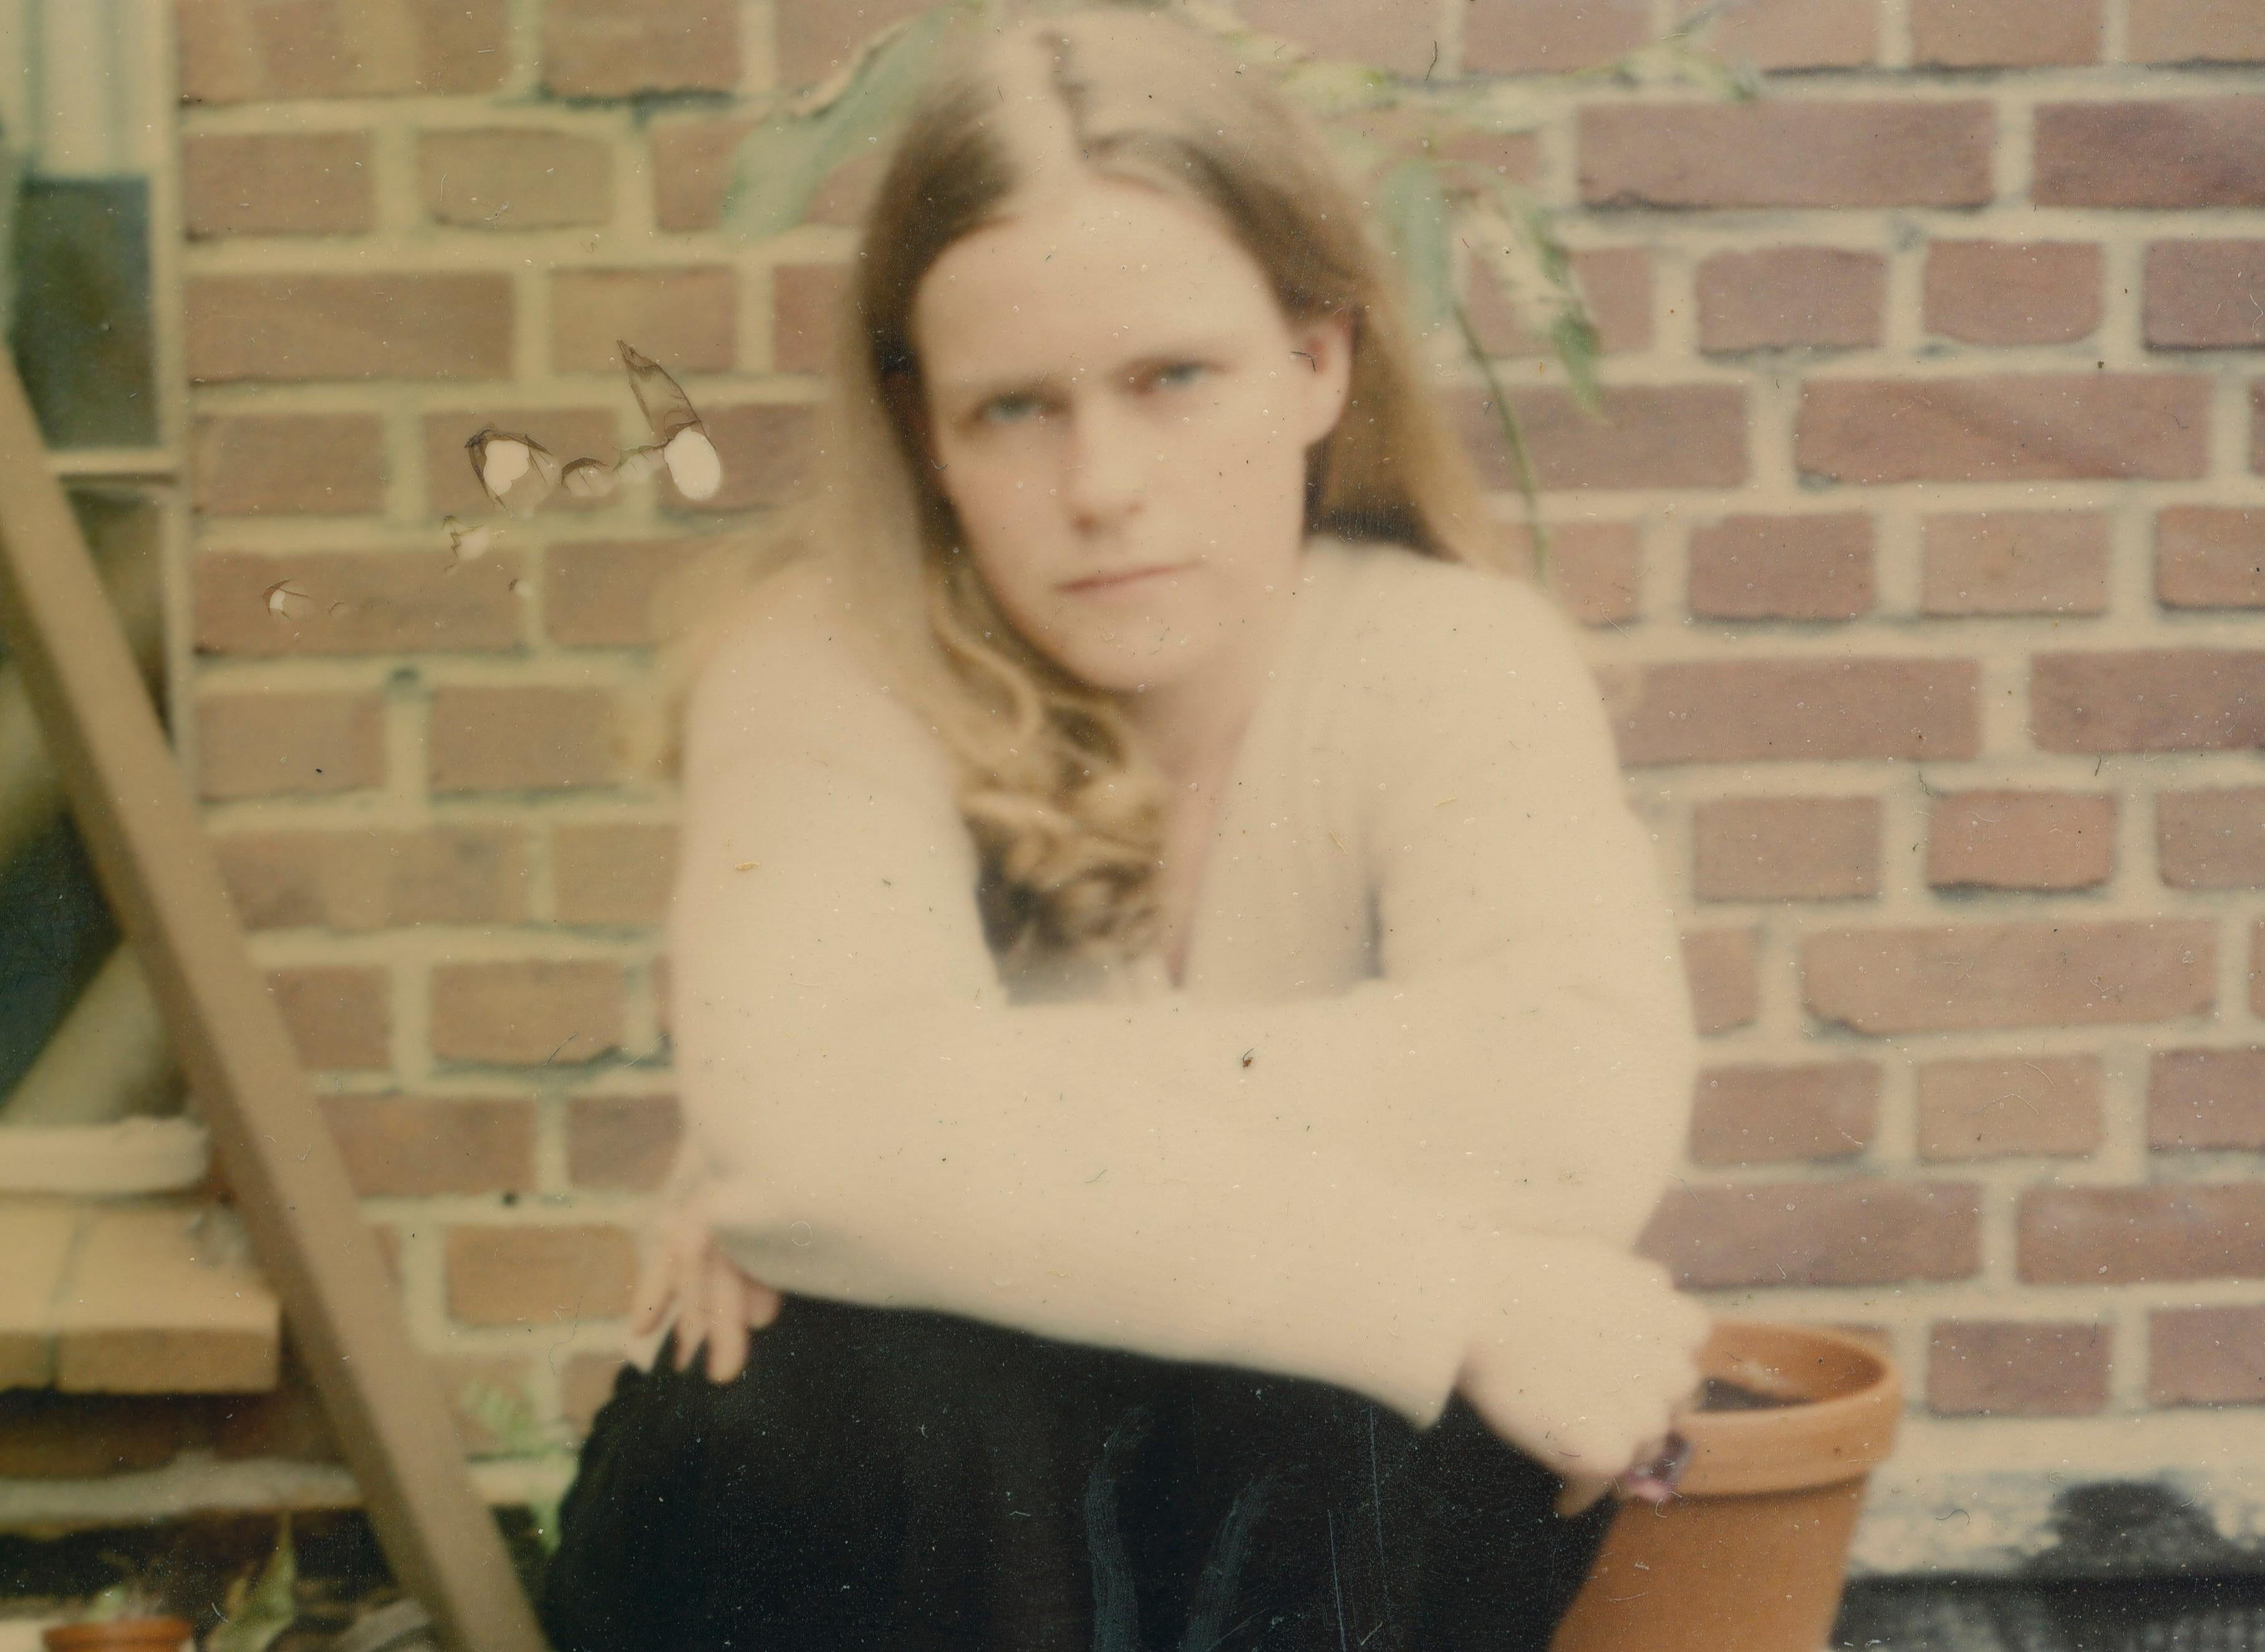 Christin, 1992 - Contemporary Photograph by Stefanie Schneider